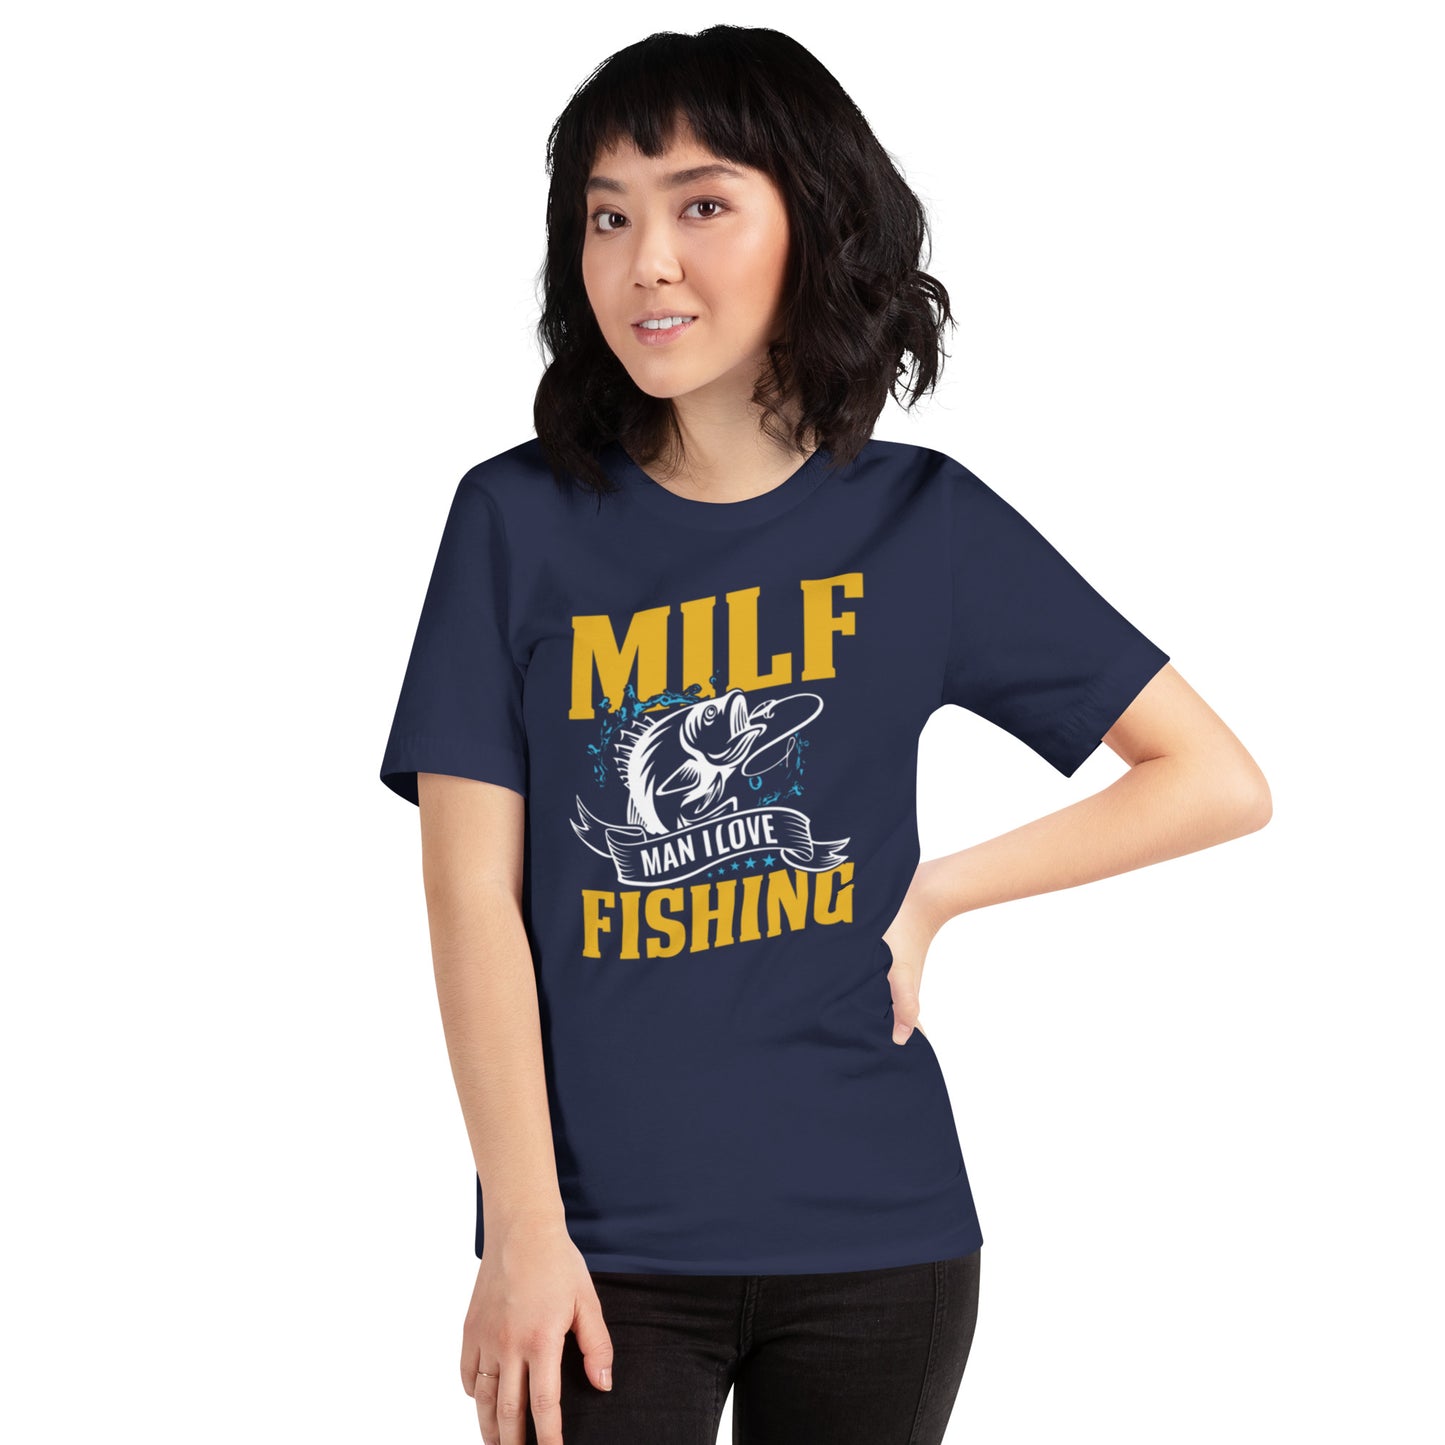 MILF (Man I Love Fishing) Unisex t-shirt